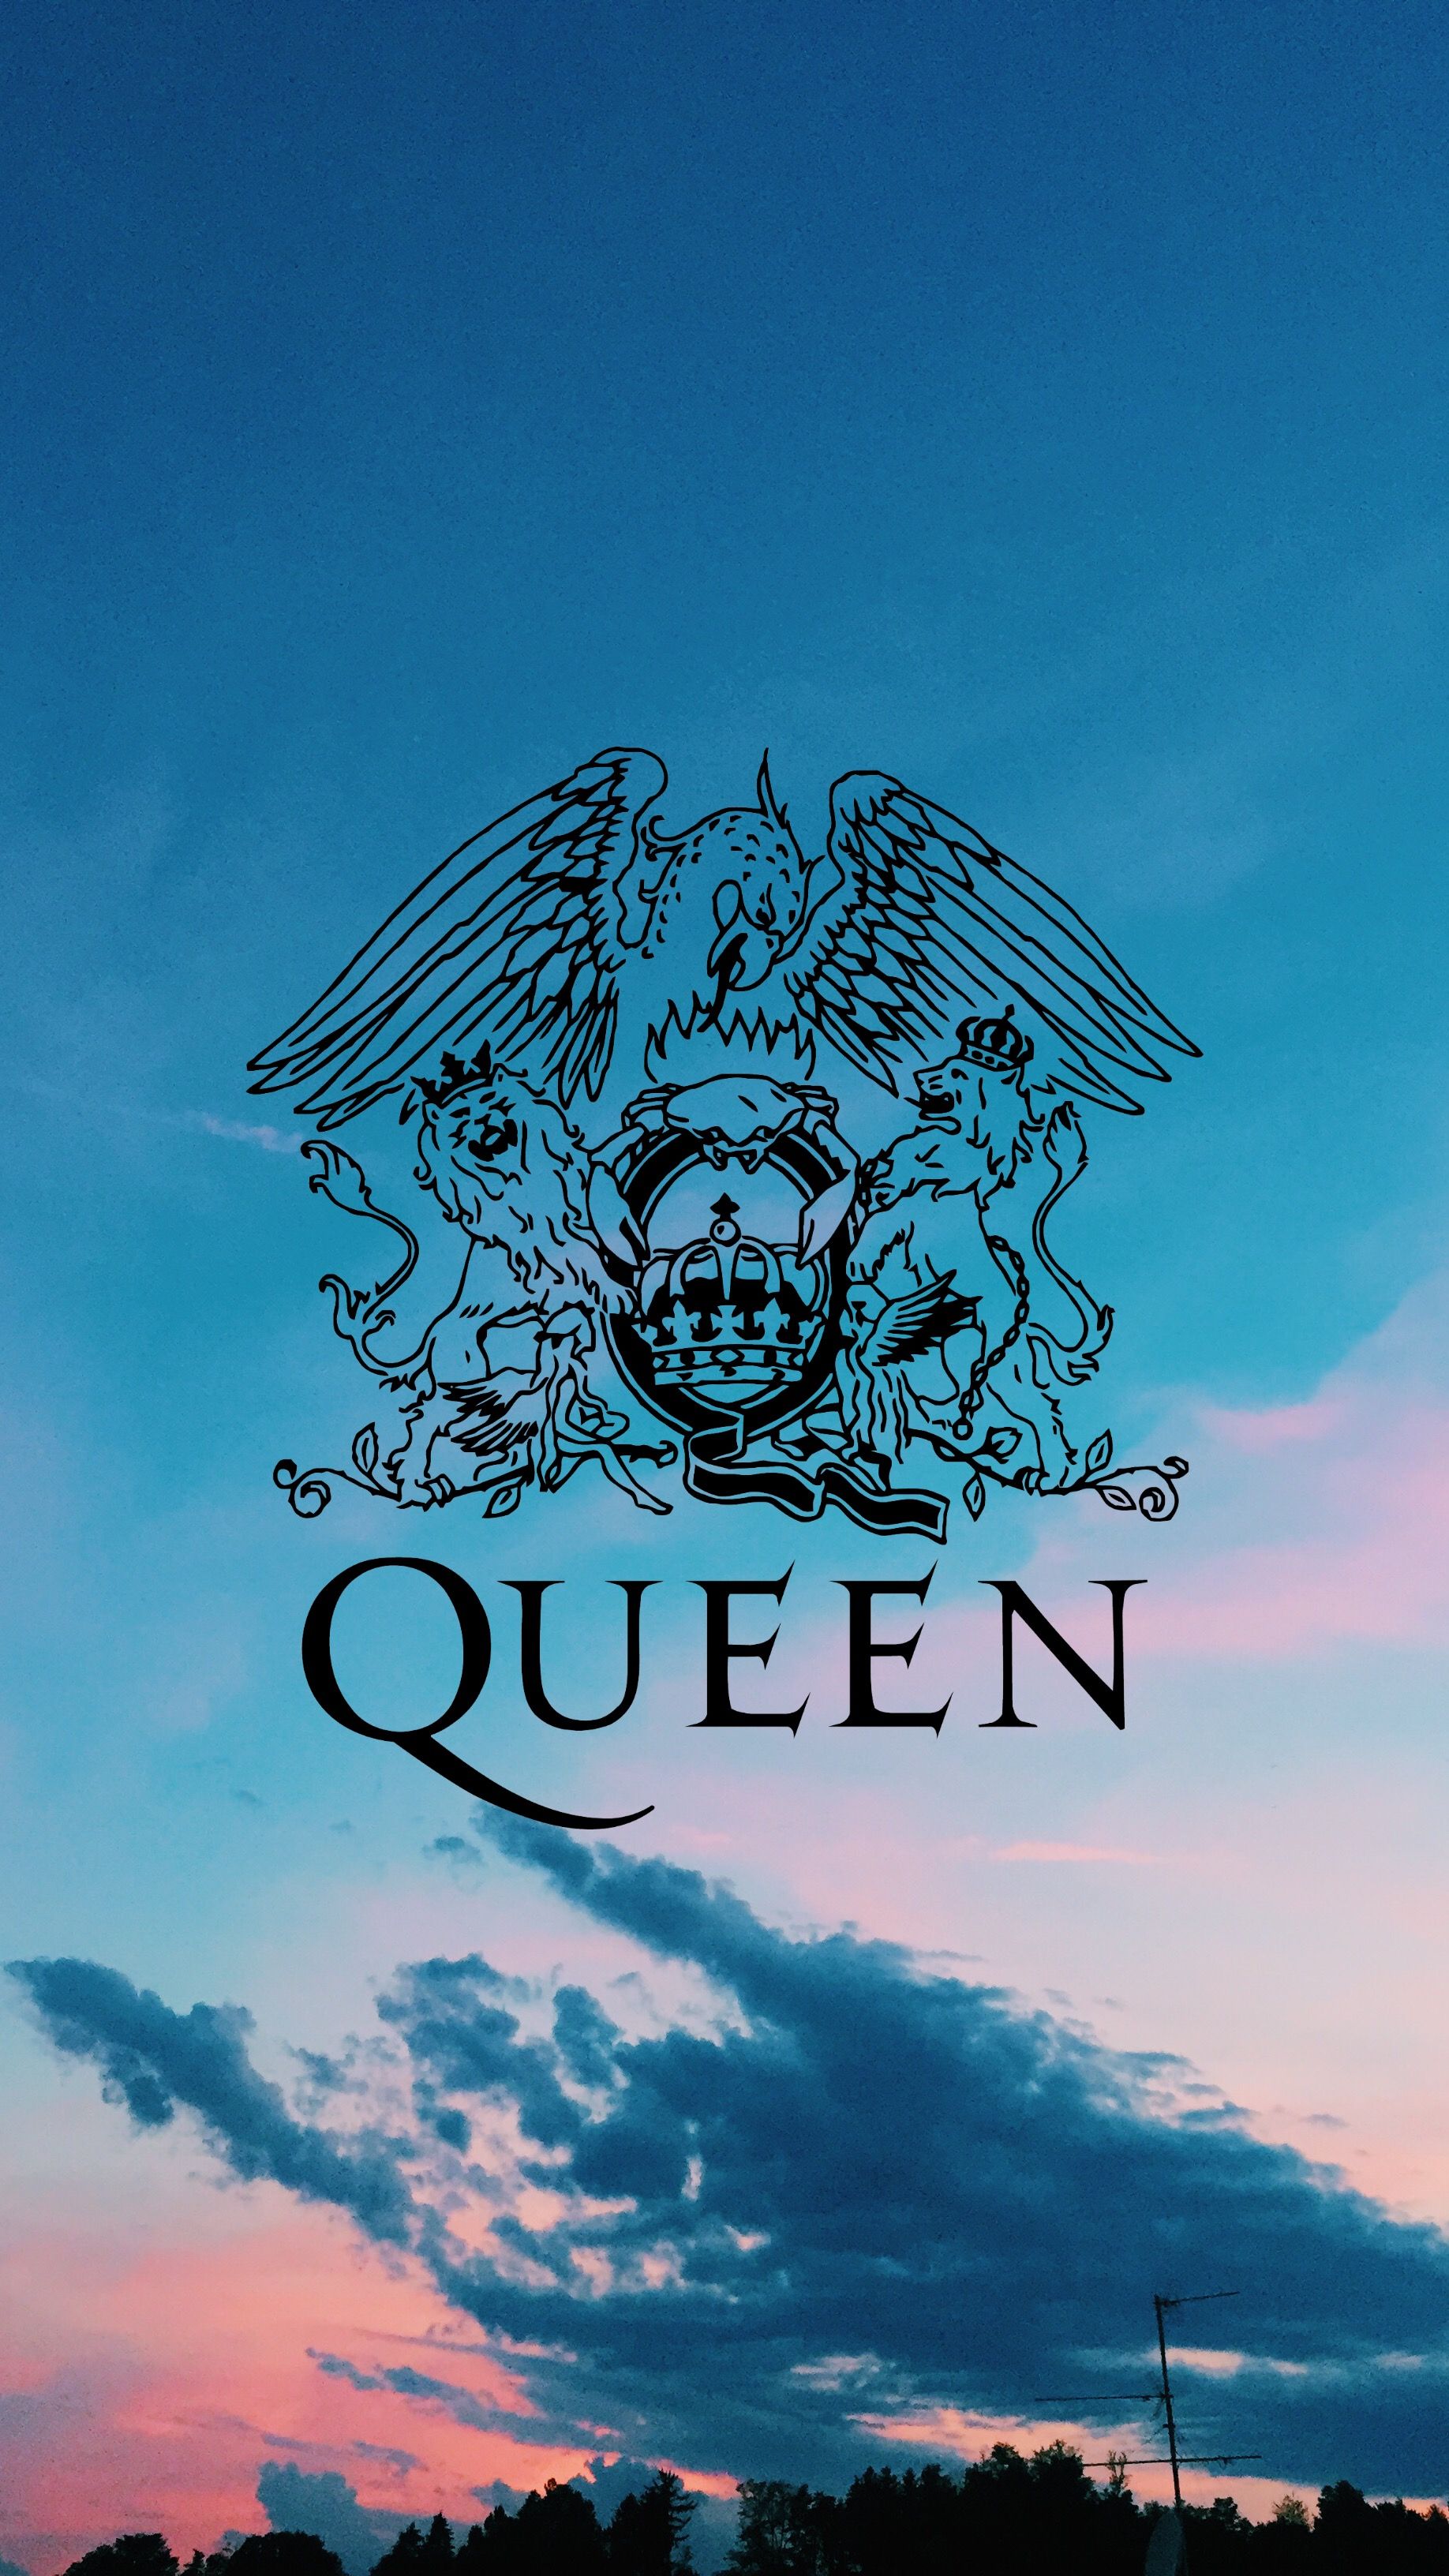 Queen Bohemian Rhapsody Drawing - HD Wallpaper 